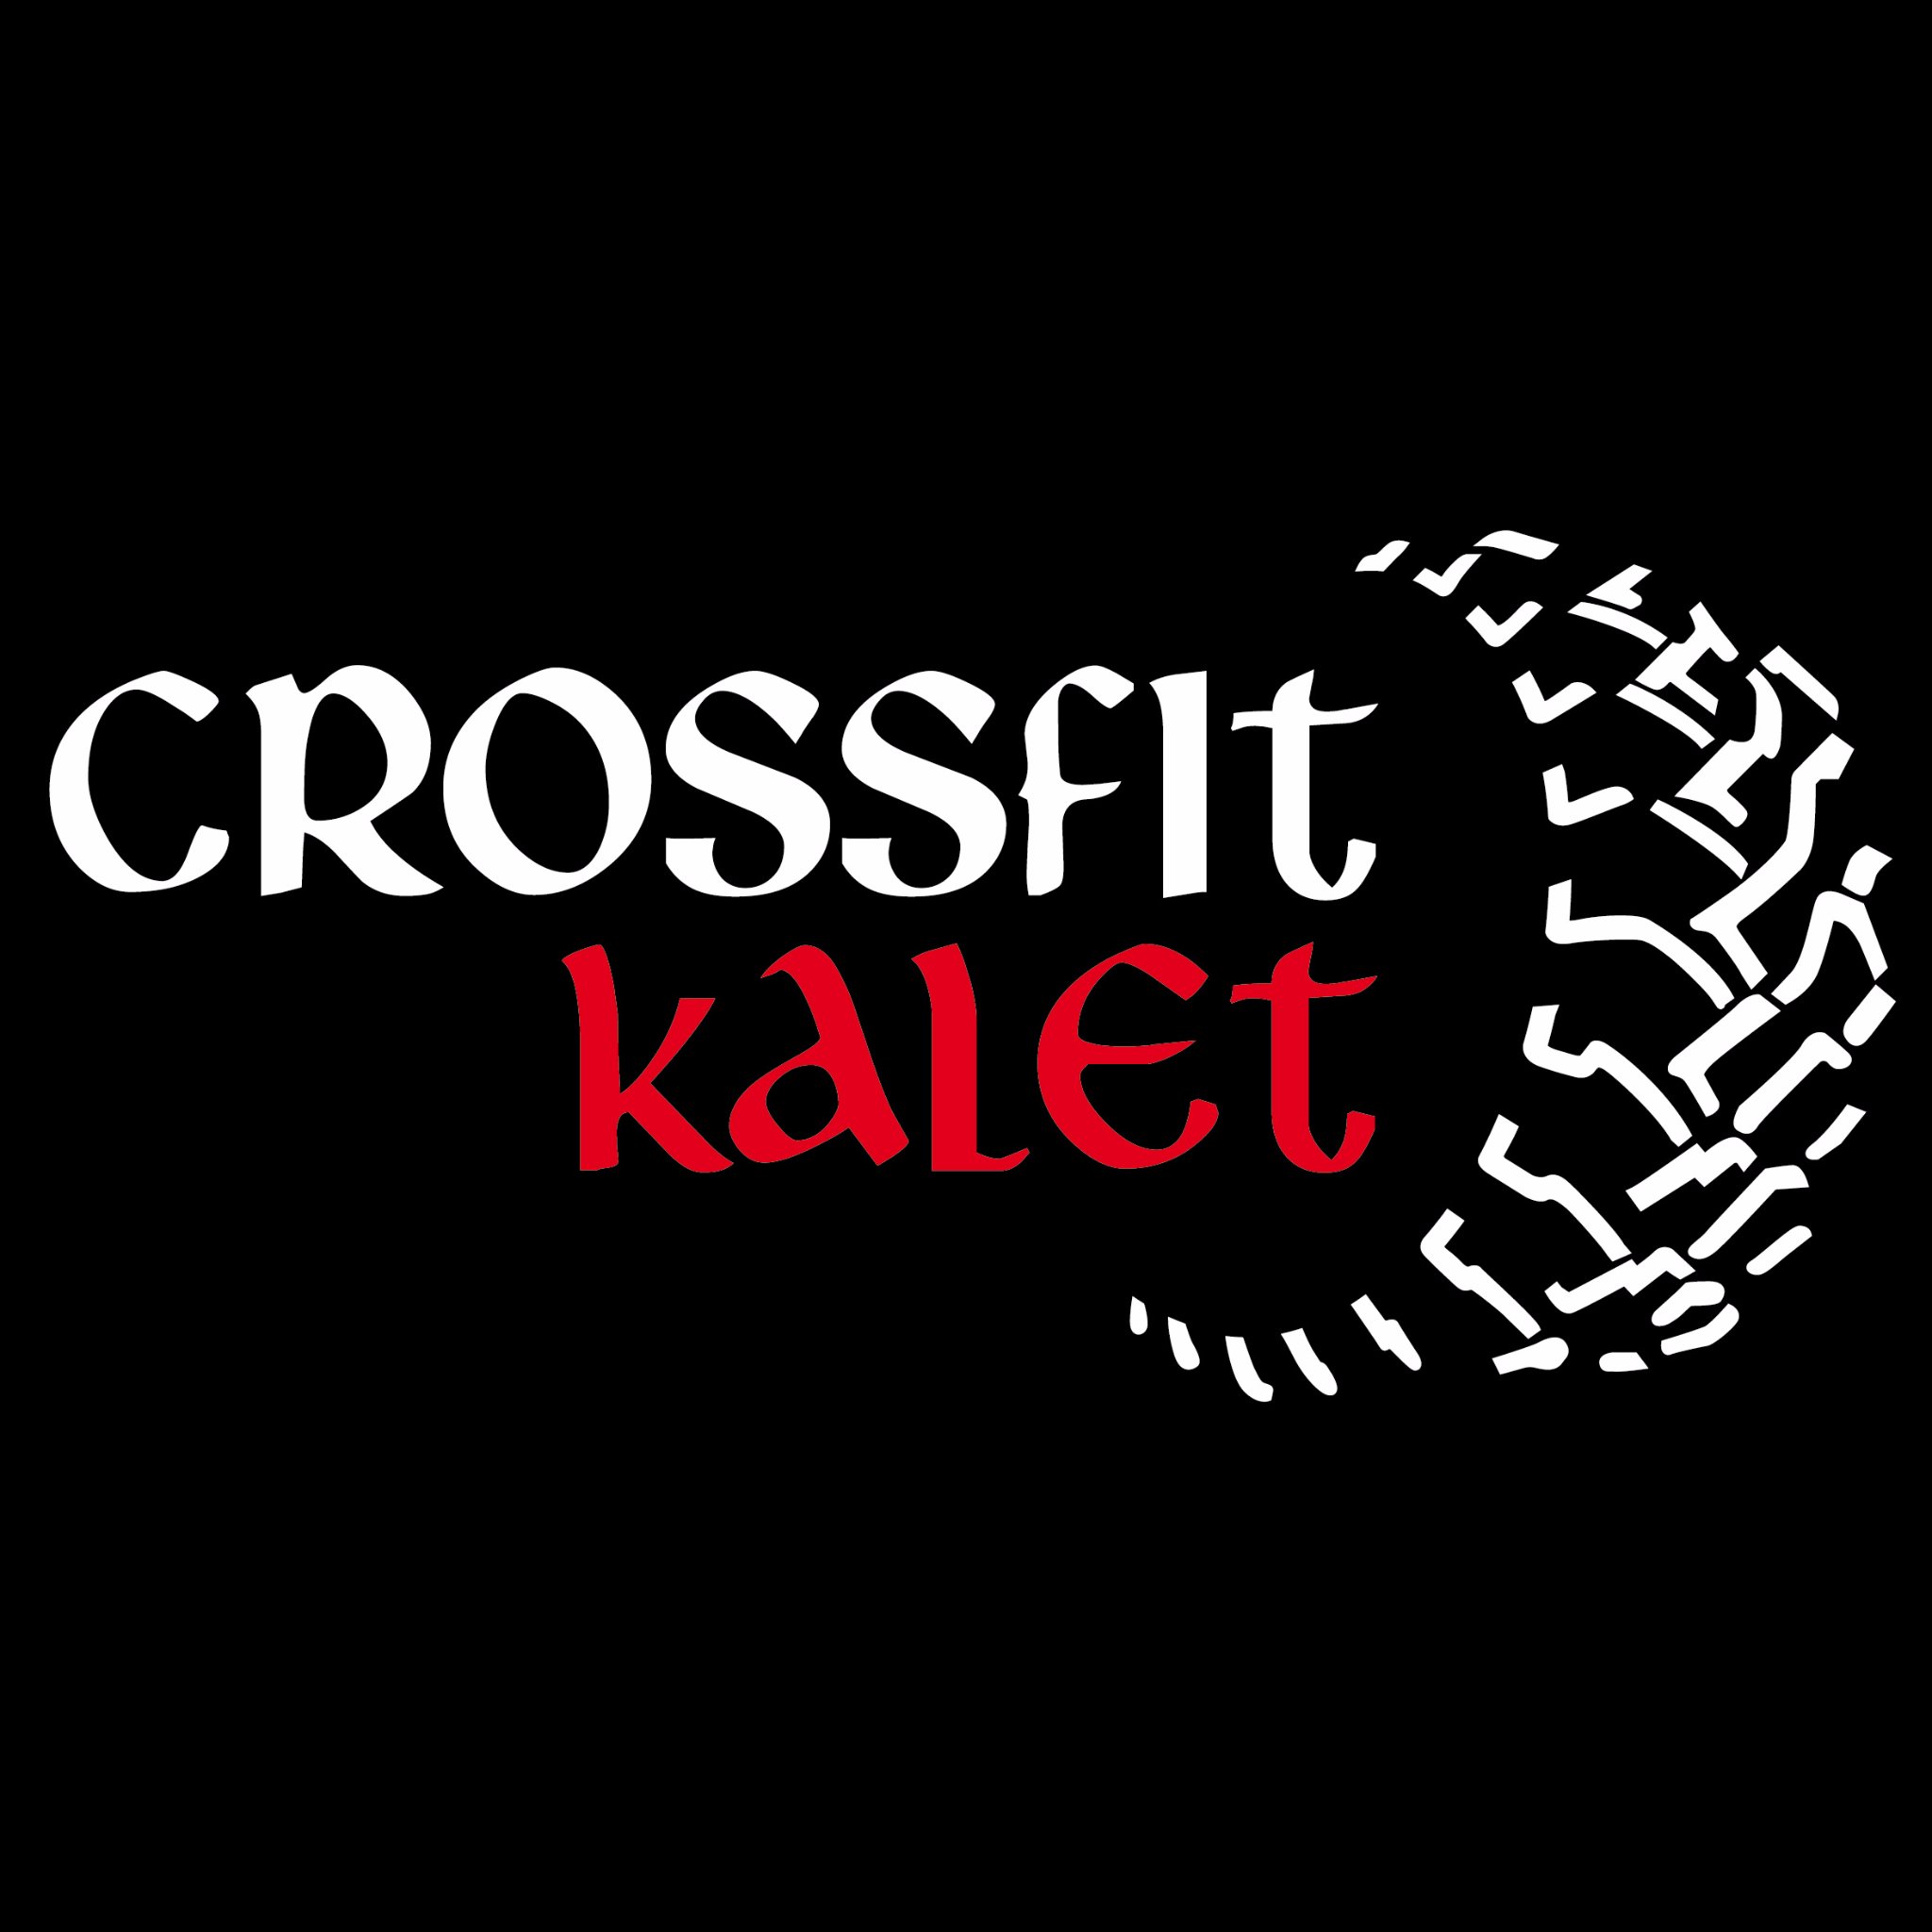 CrossFitKalet